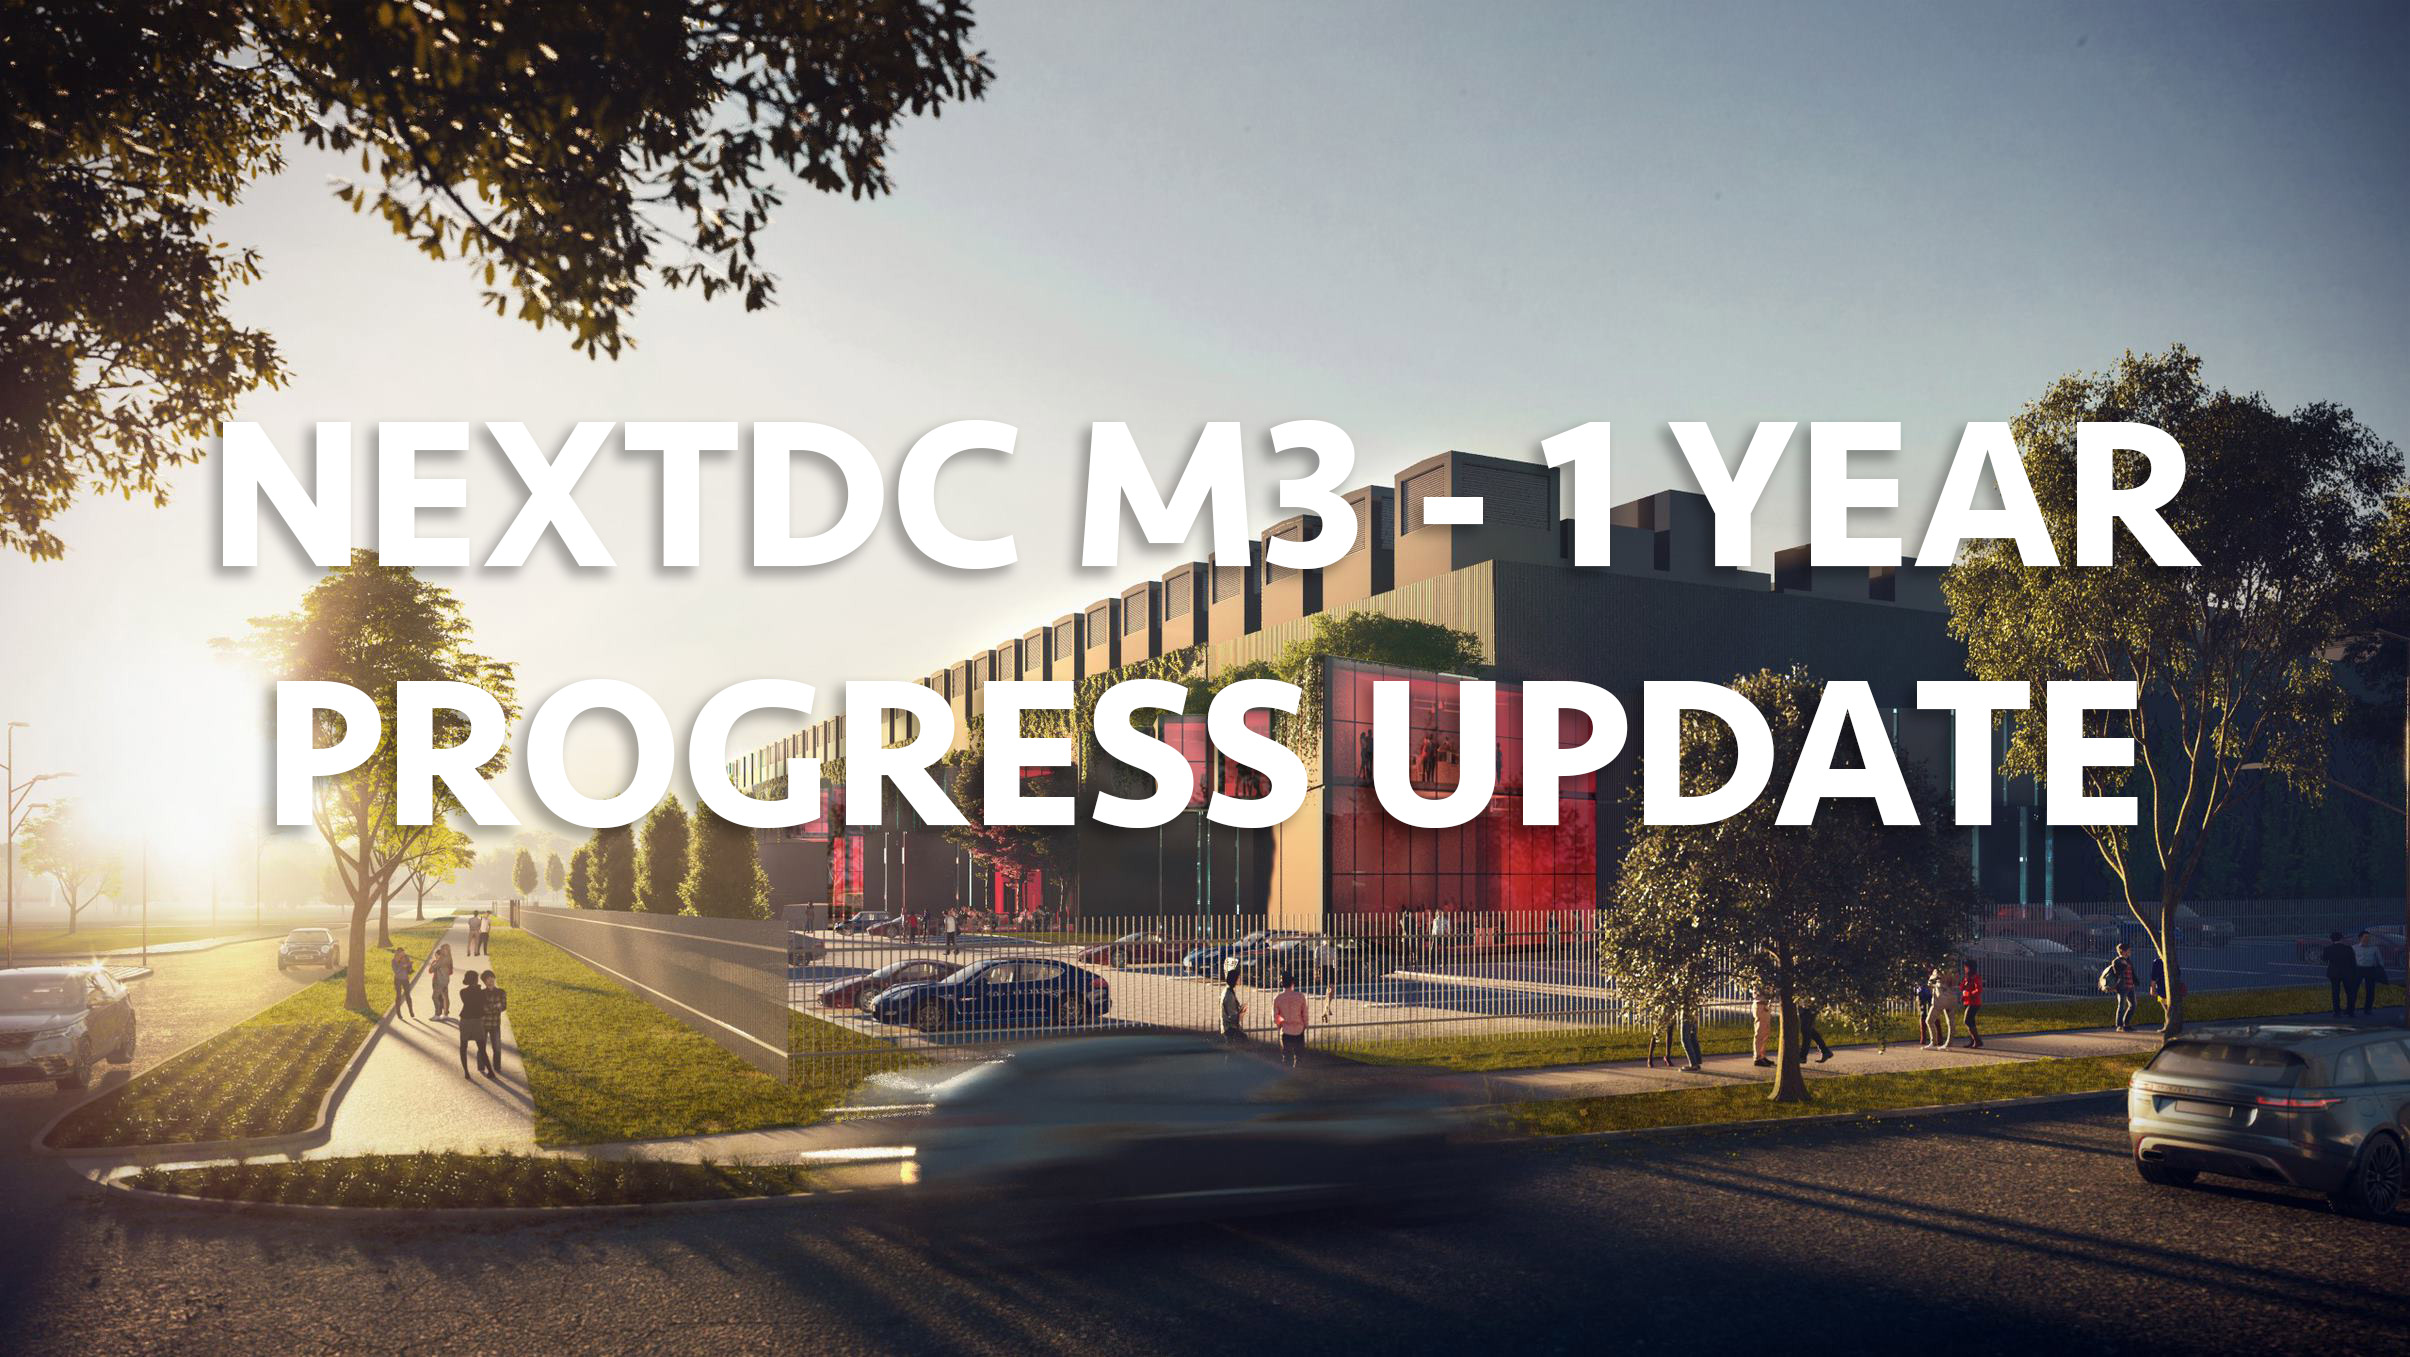 NEXTDC M3 - 1 Year Progress Update